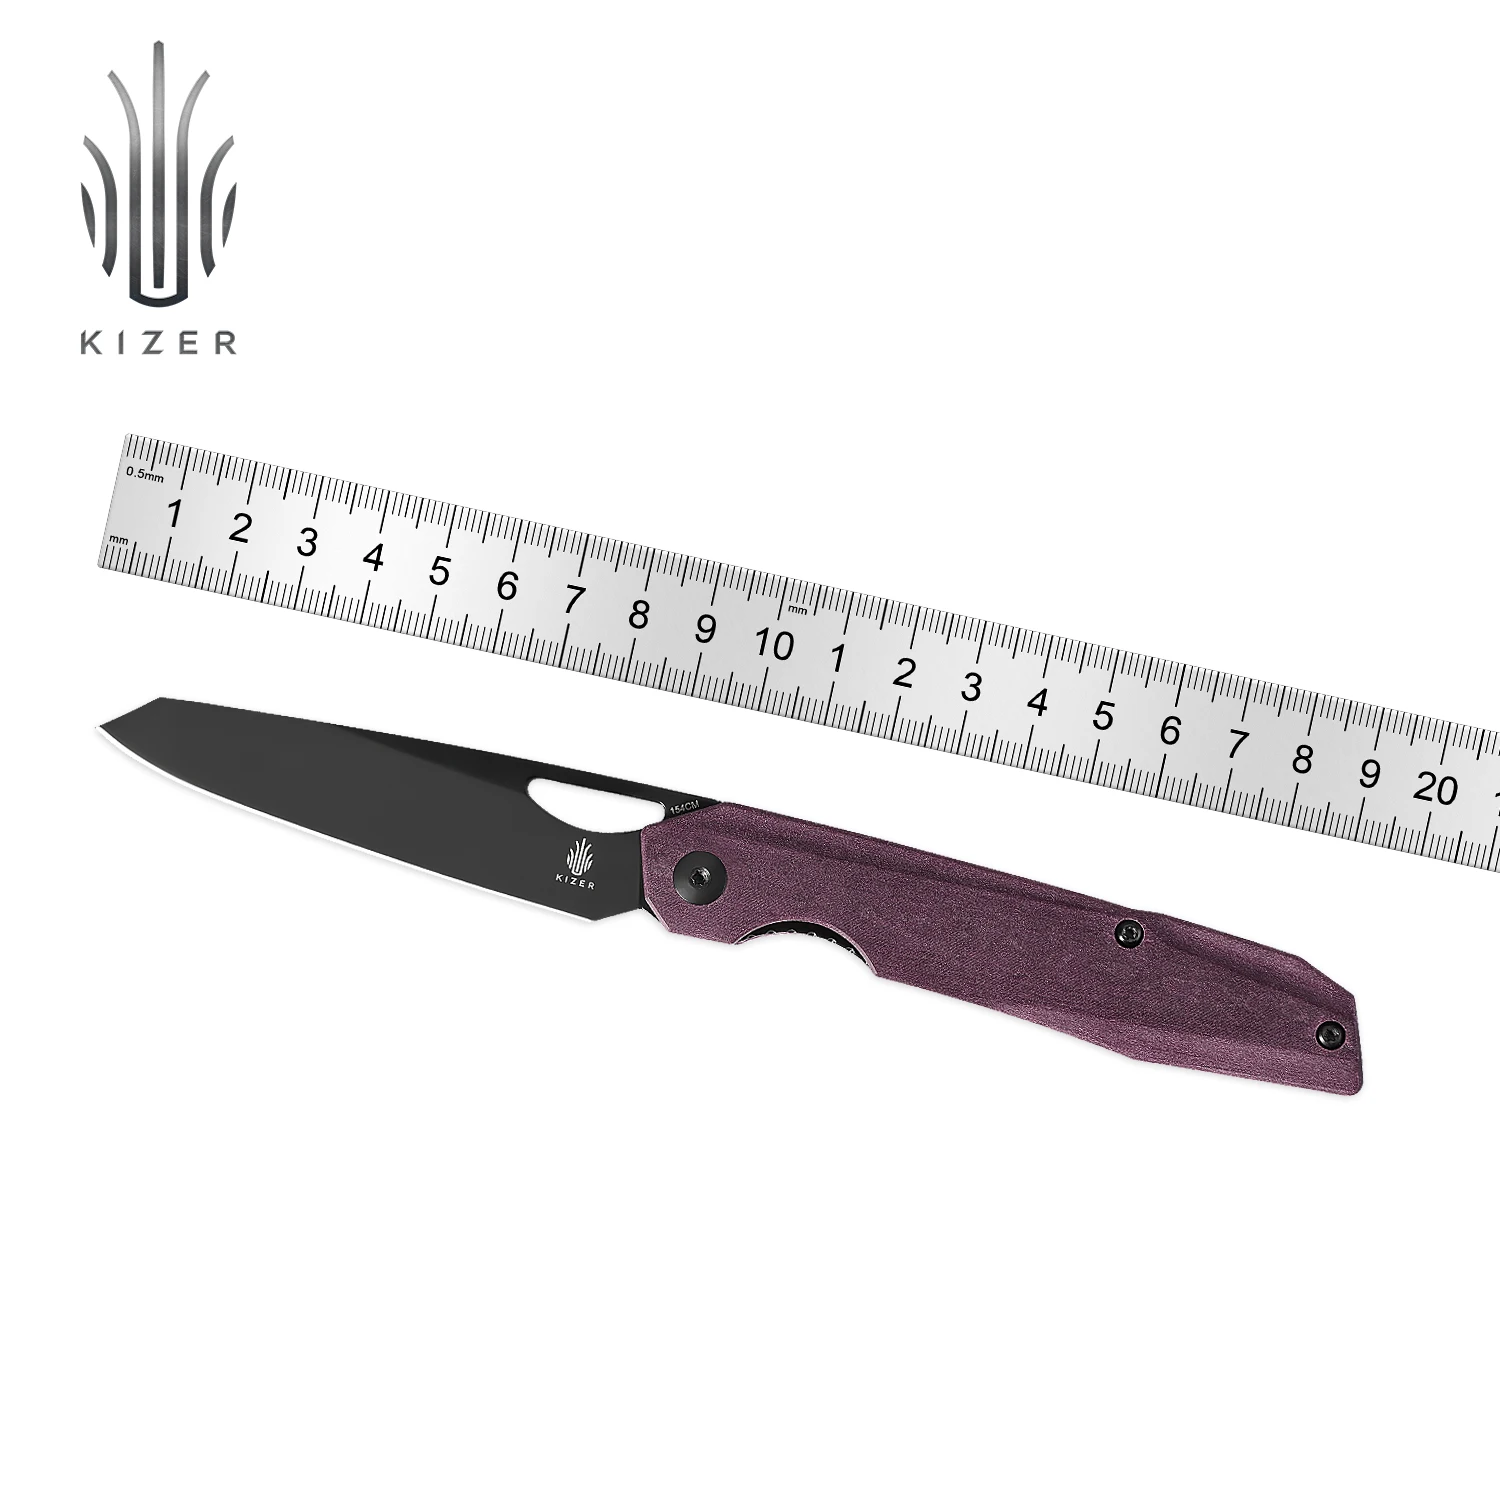 Kizer Pocket Knife Genie V4545C2 2022 New Red Richlite Handle with 154CM Steel Black Blade Tactical Knife for Hunting Tools